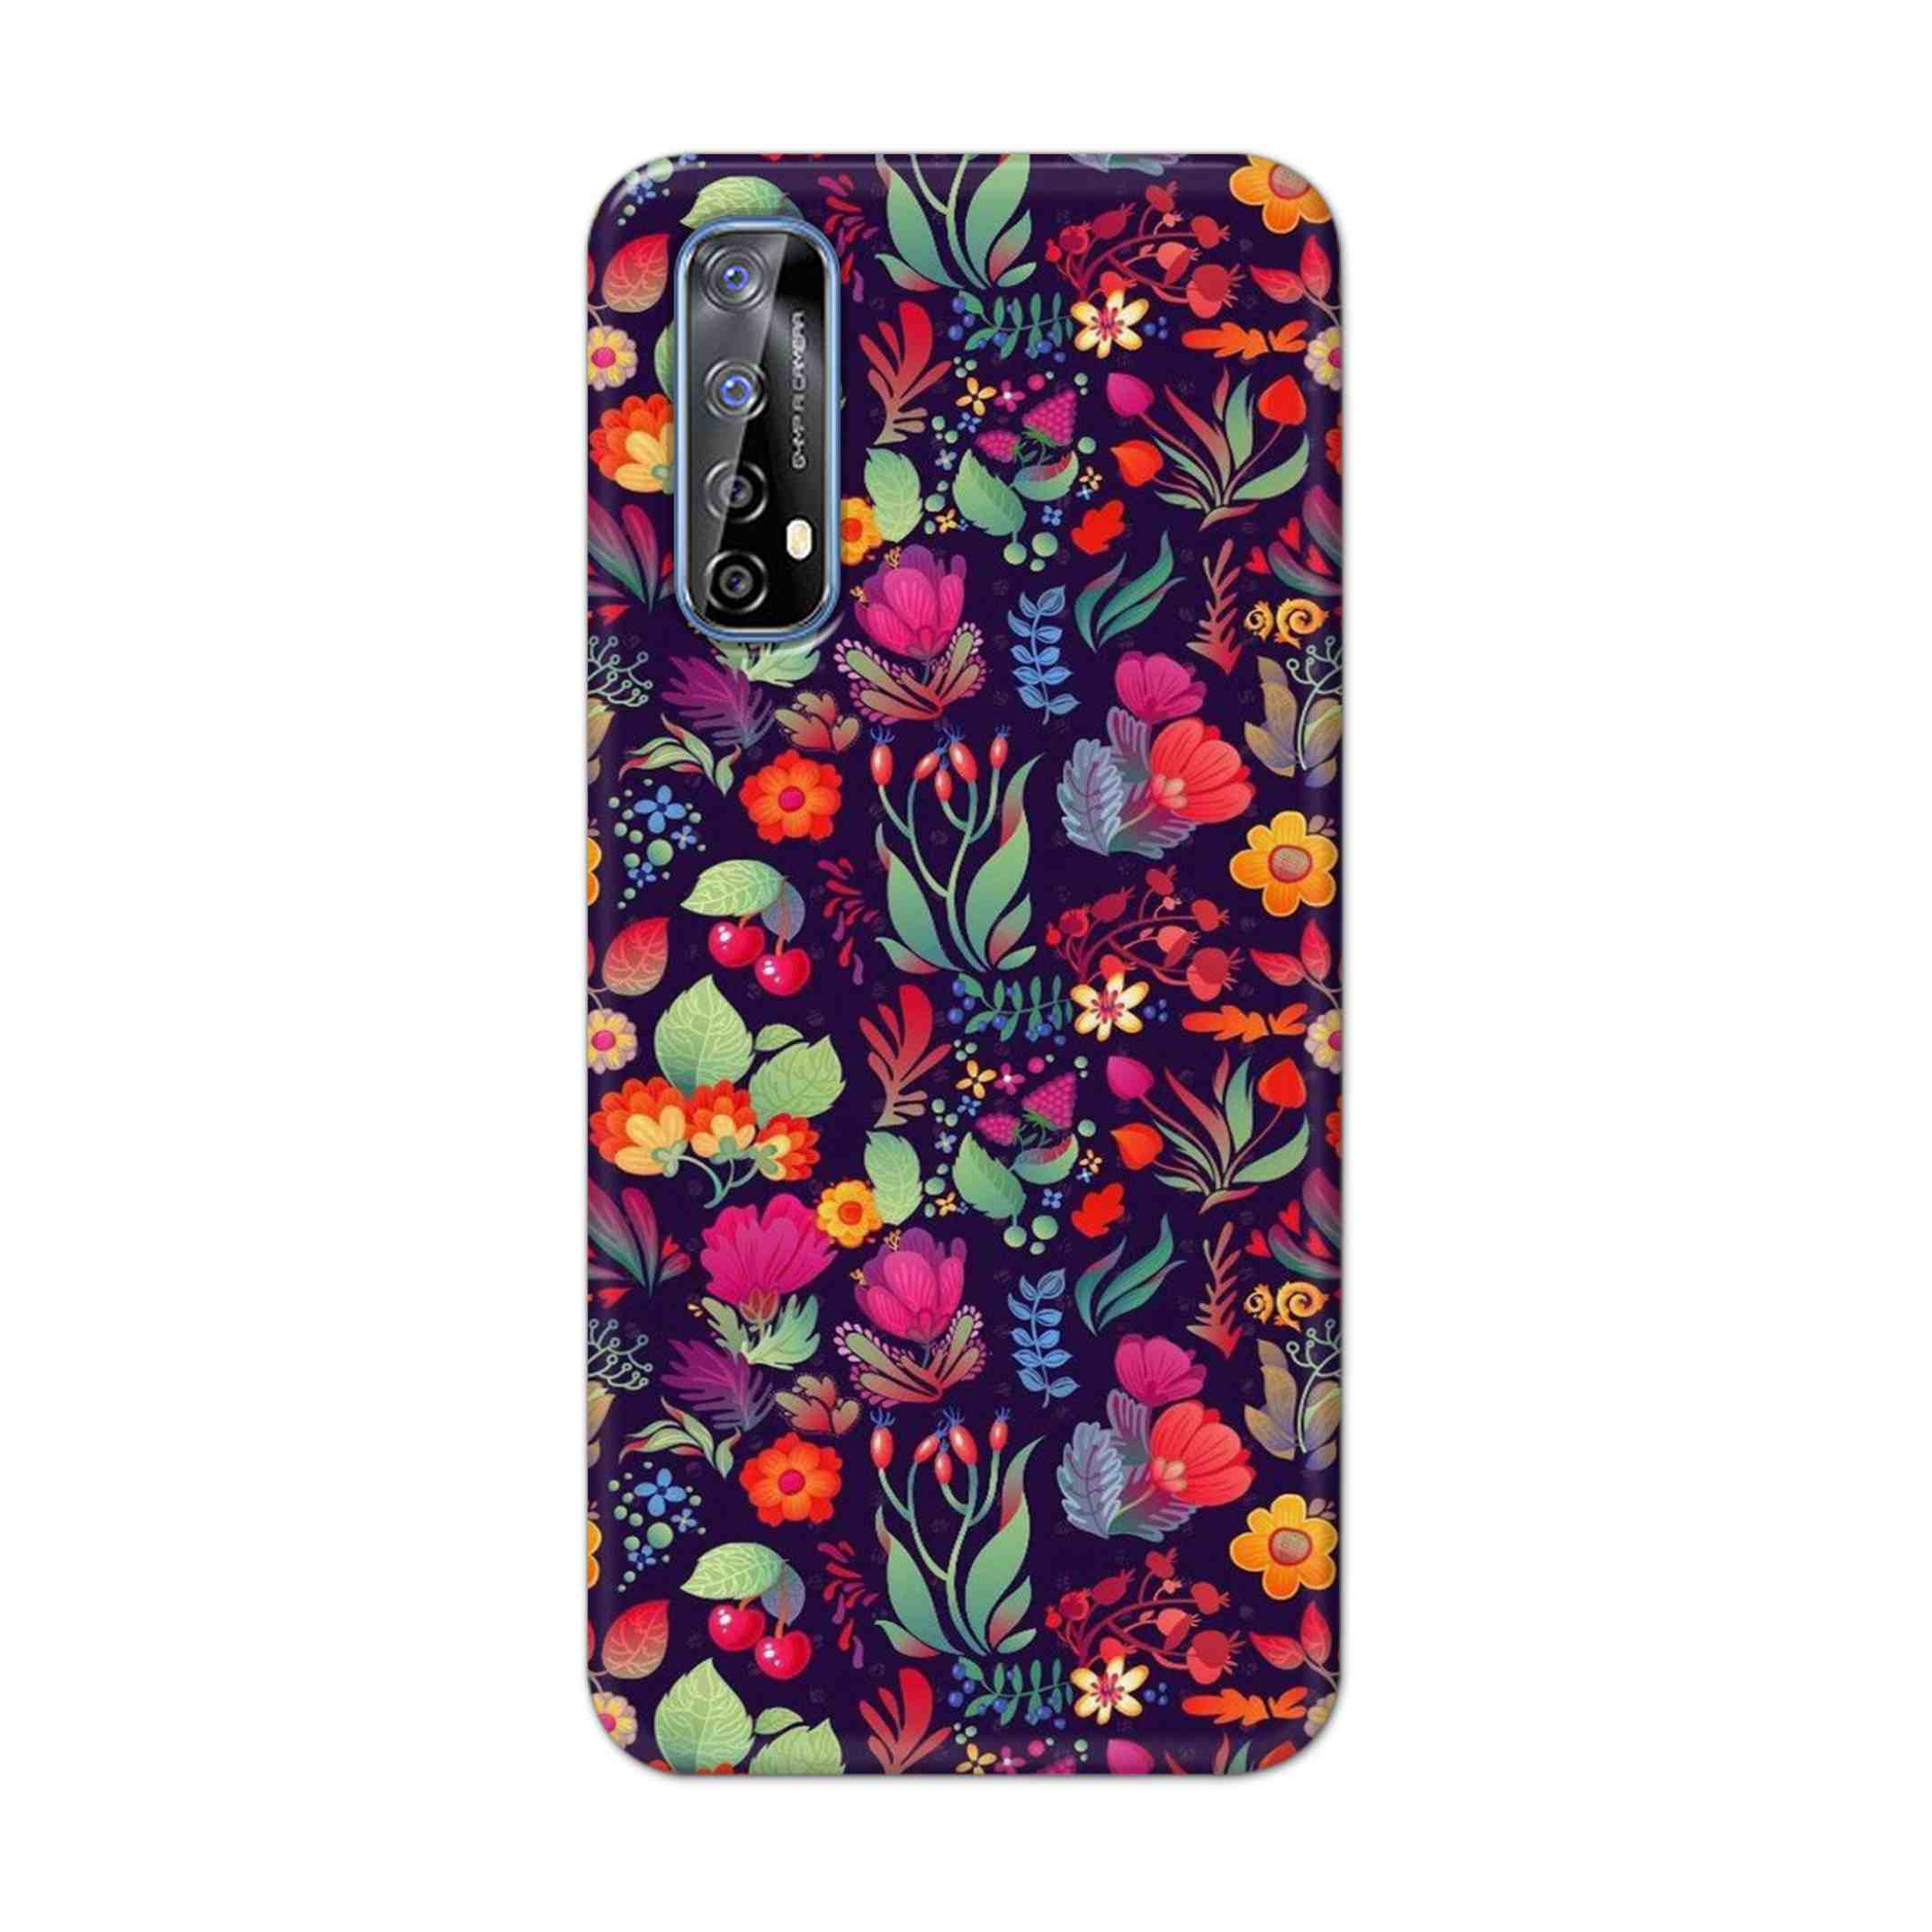 Buy Fruits Flower Hard Back Mobile Phone Case Cover For Realme 7 Online